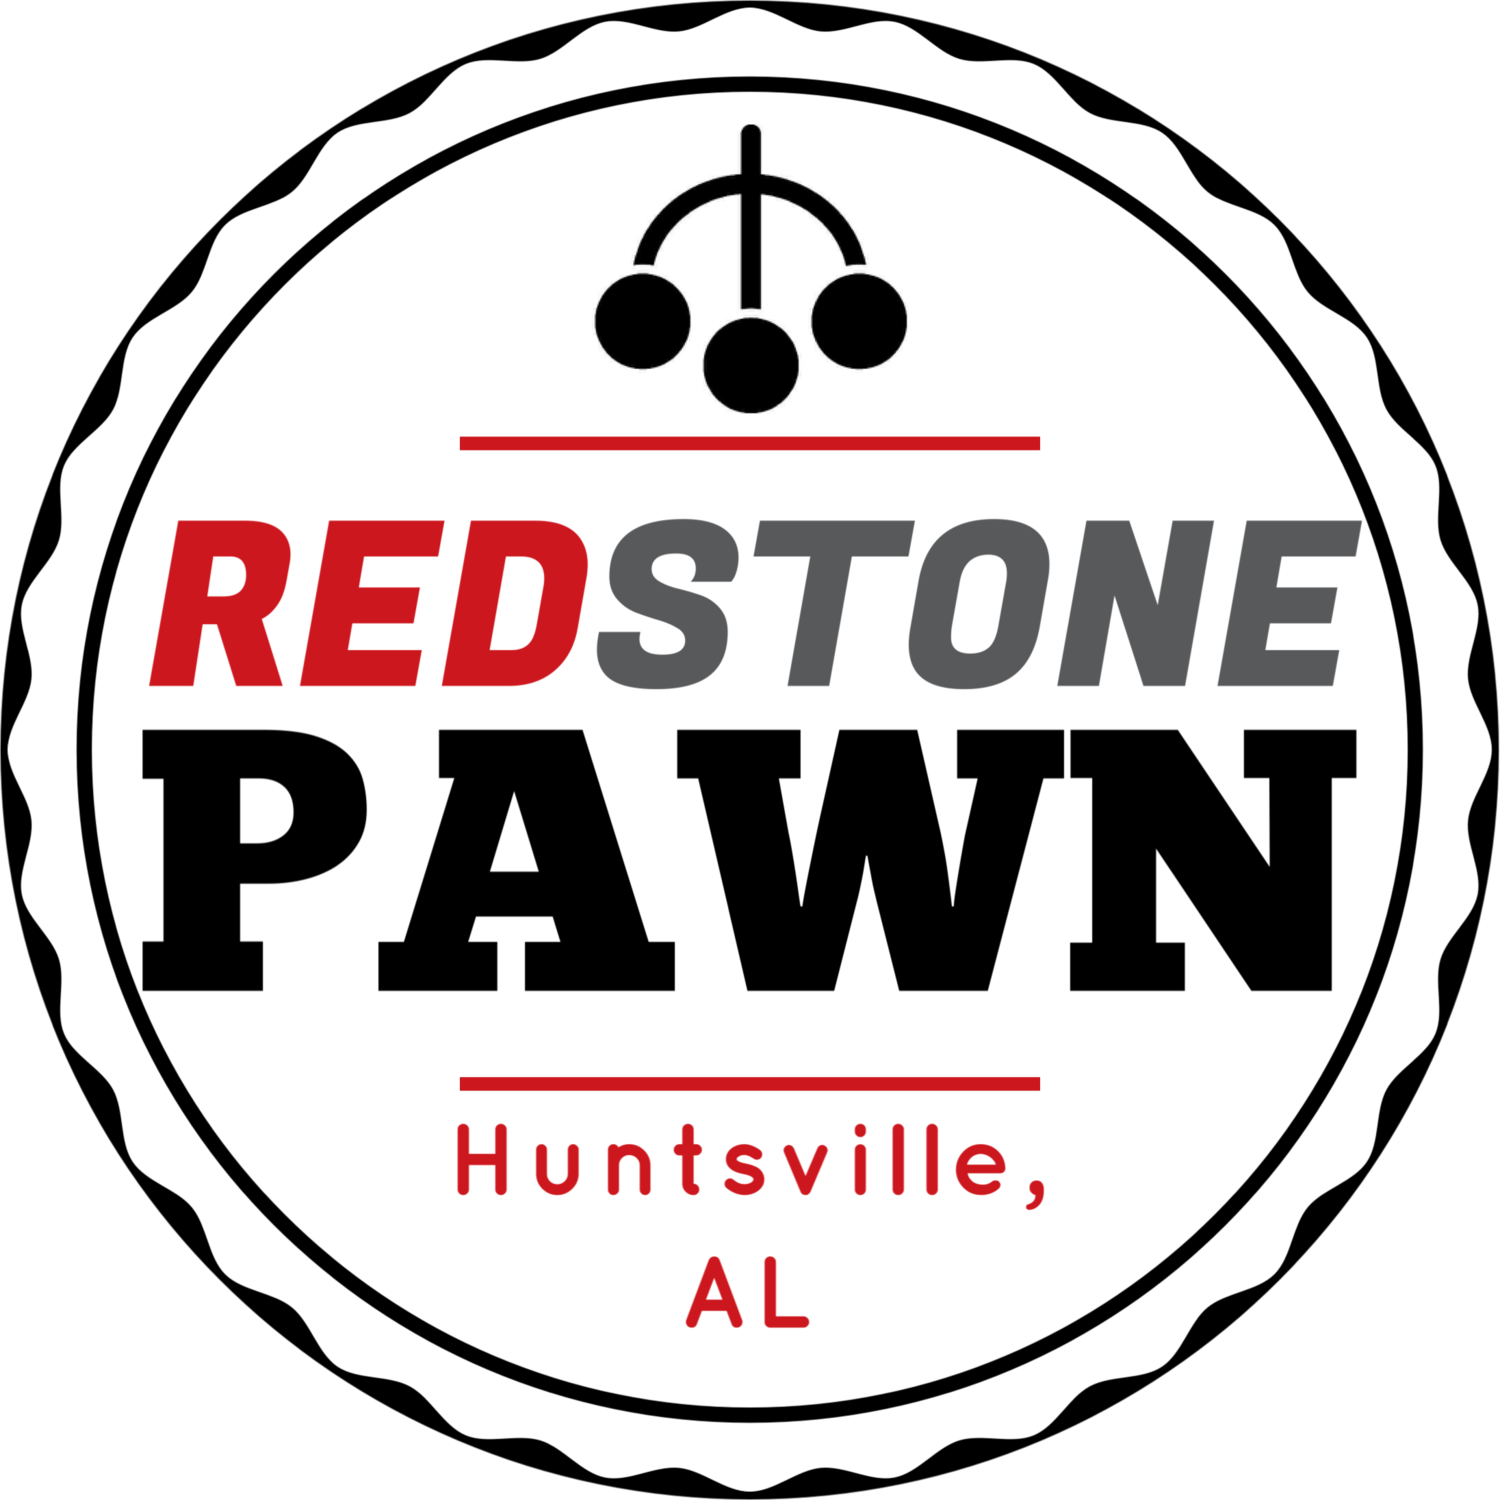 Redstone Pawn